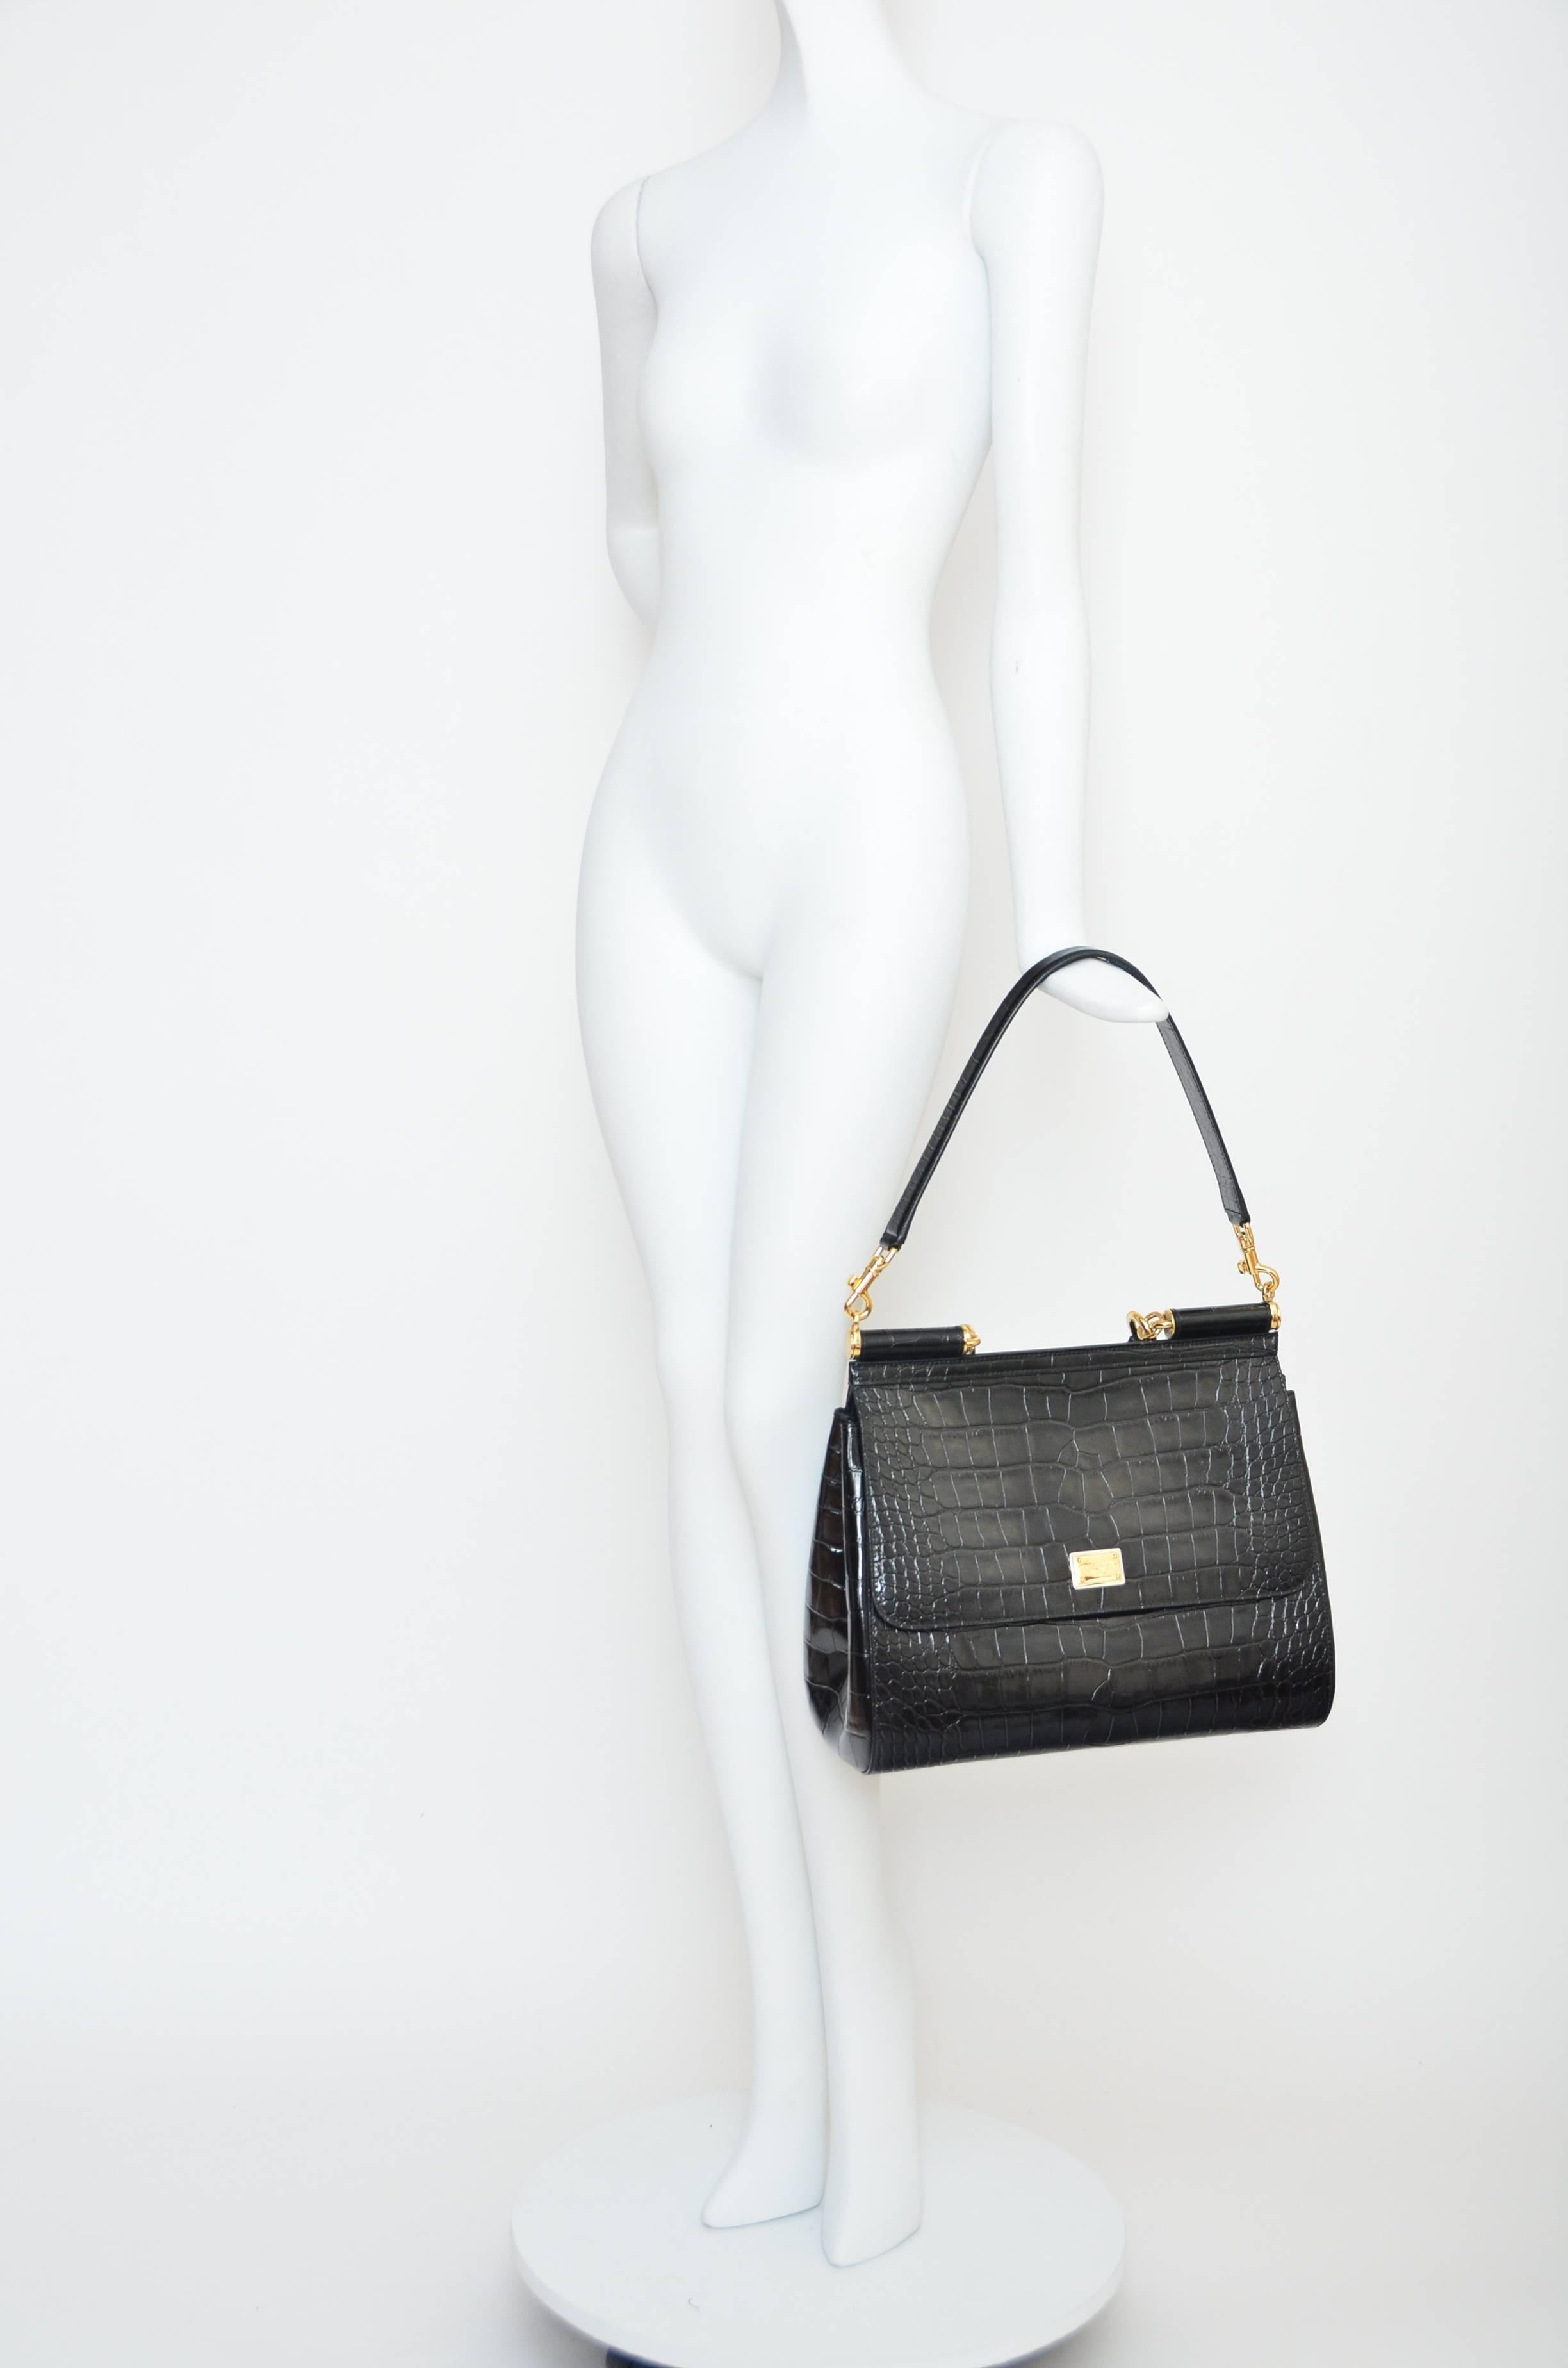 Dolce & Gabbana Crocodile  Handbag Large Miss Sicily MINT  3